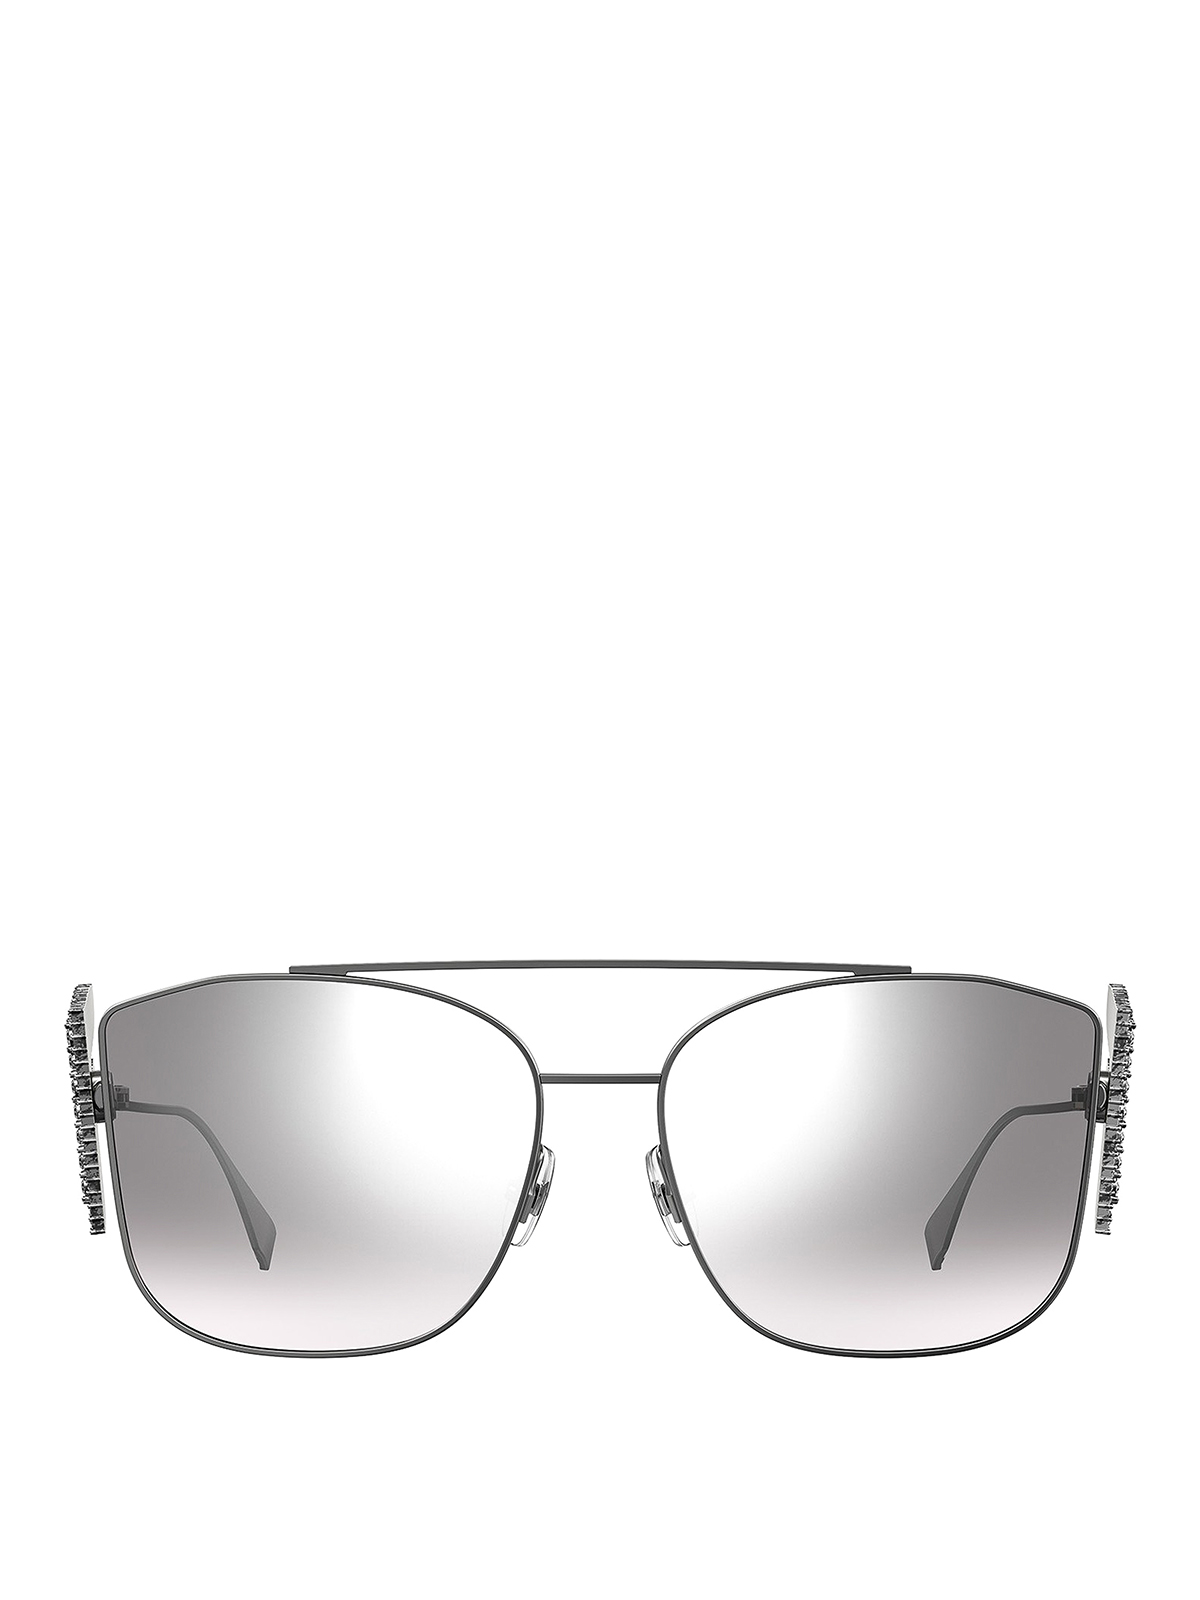 fendi sunglasses with f on lens